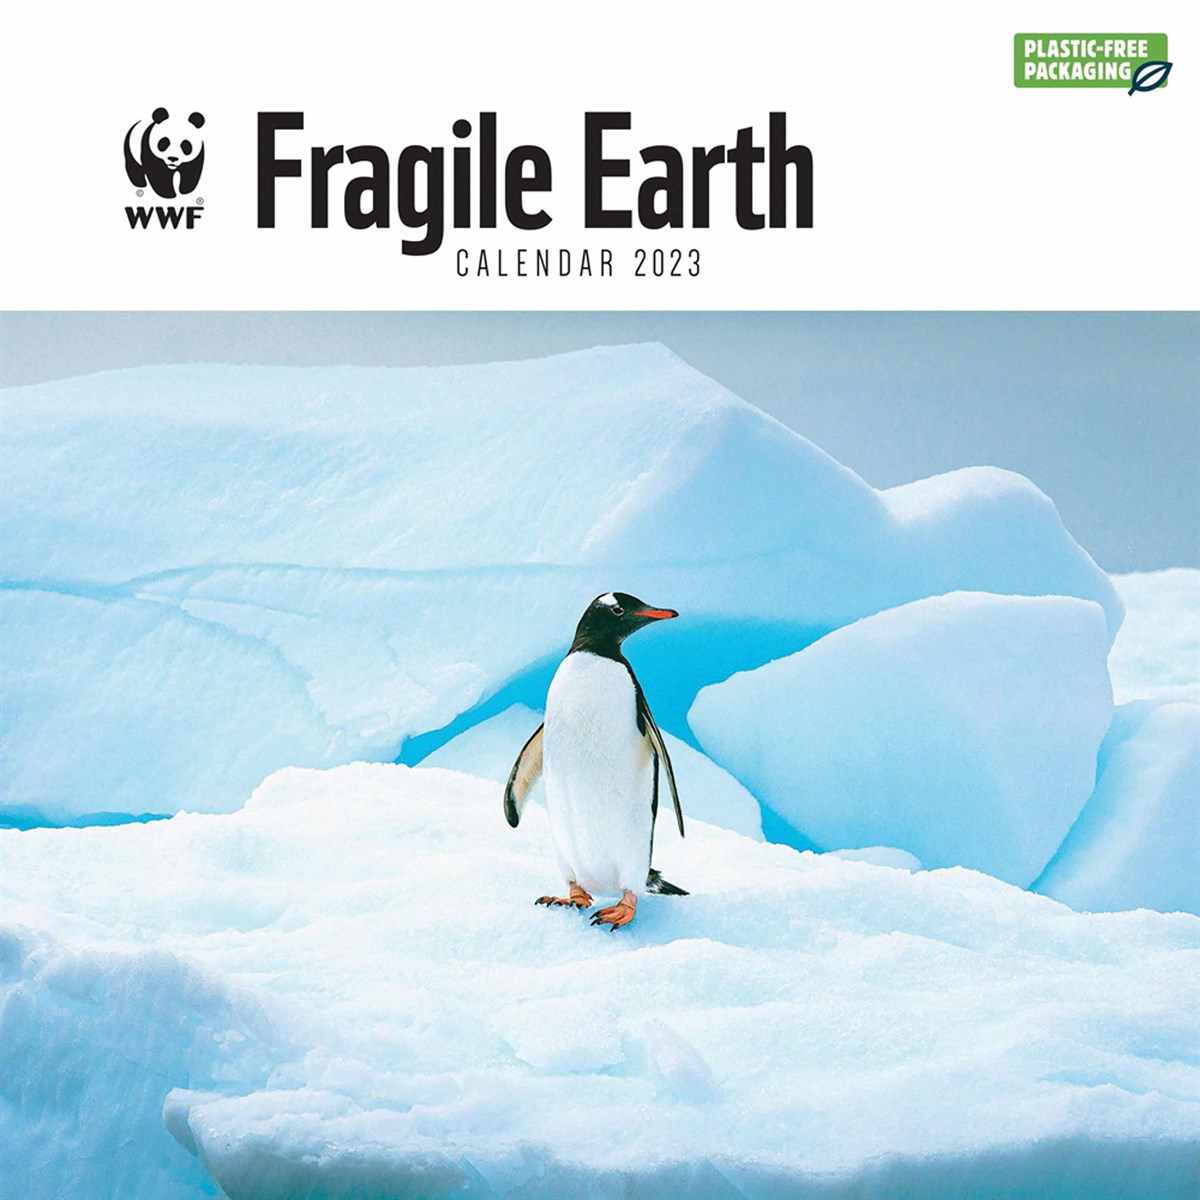 WWF, Fragile Earth 2023 Calendars